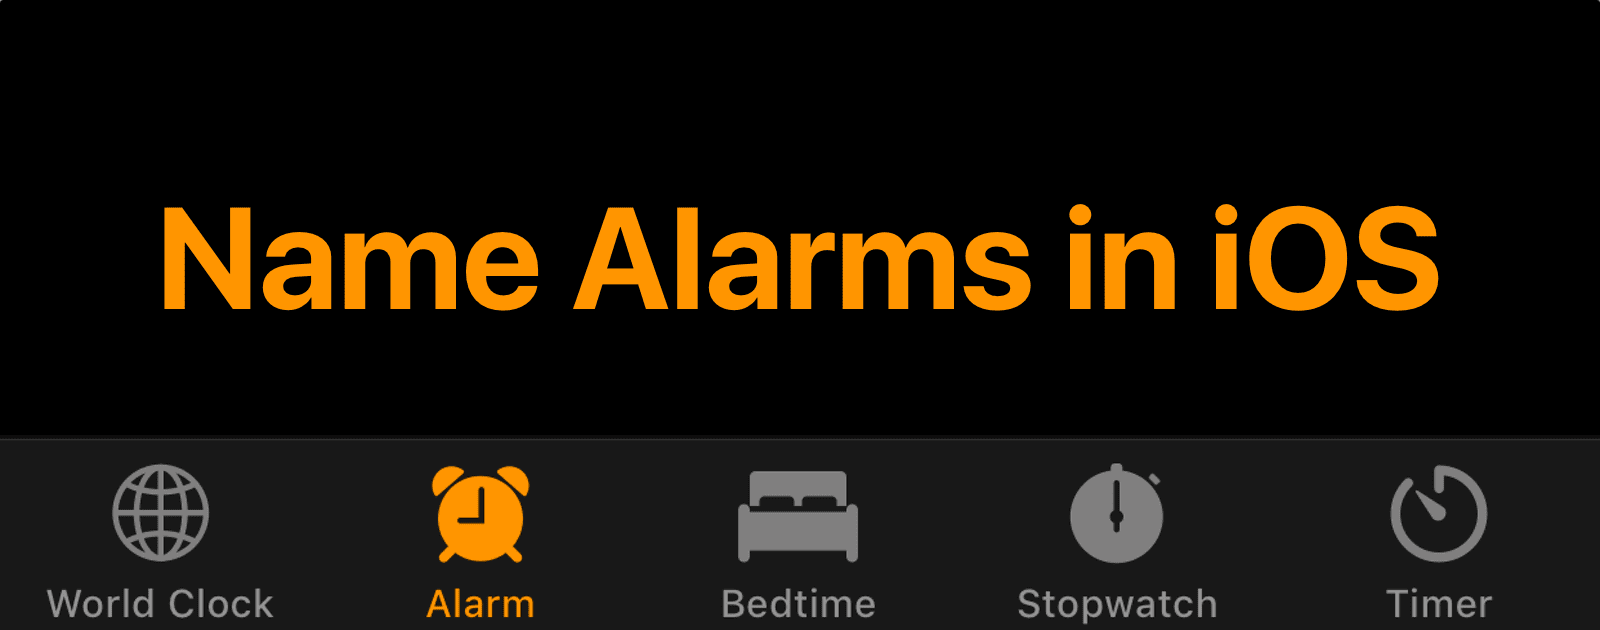 how to set an alarm on mac air